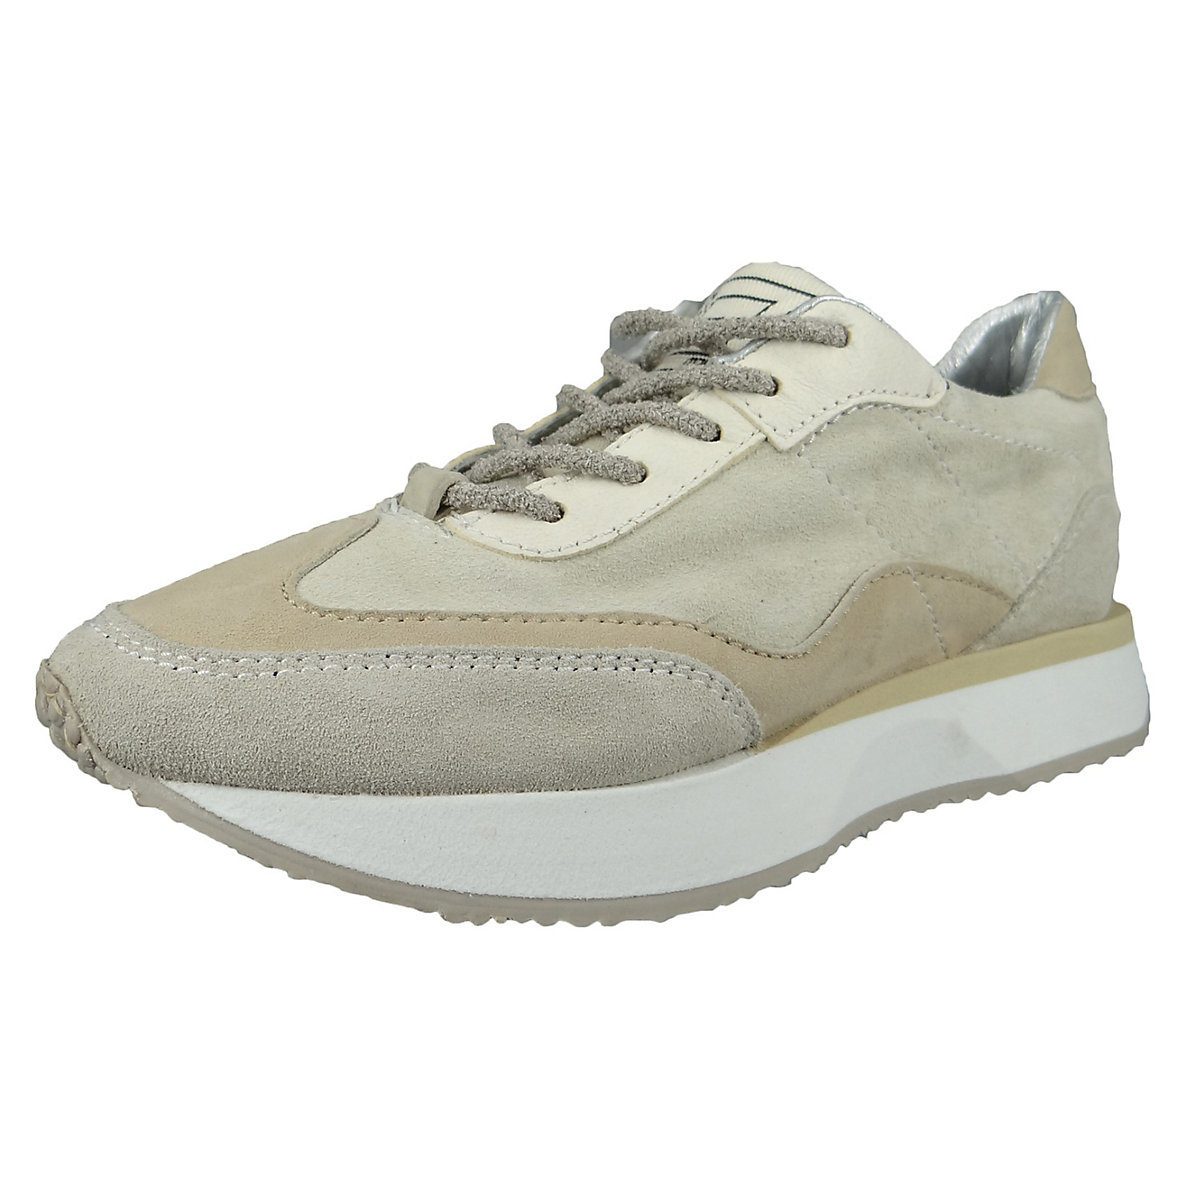 MJUS Damen Low Sneaker Fizz Low Top P49101-0201 Creme 0001 Capppucino Latte Leder und Textil Sneakers Low beige